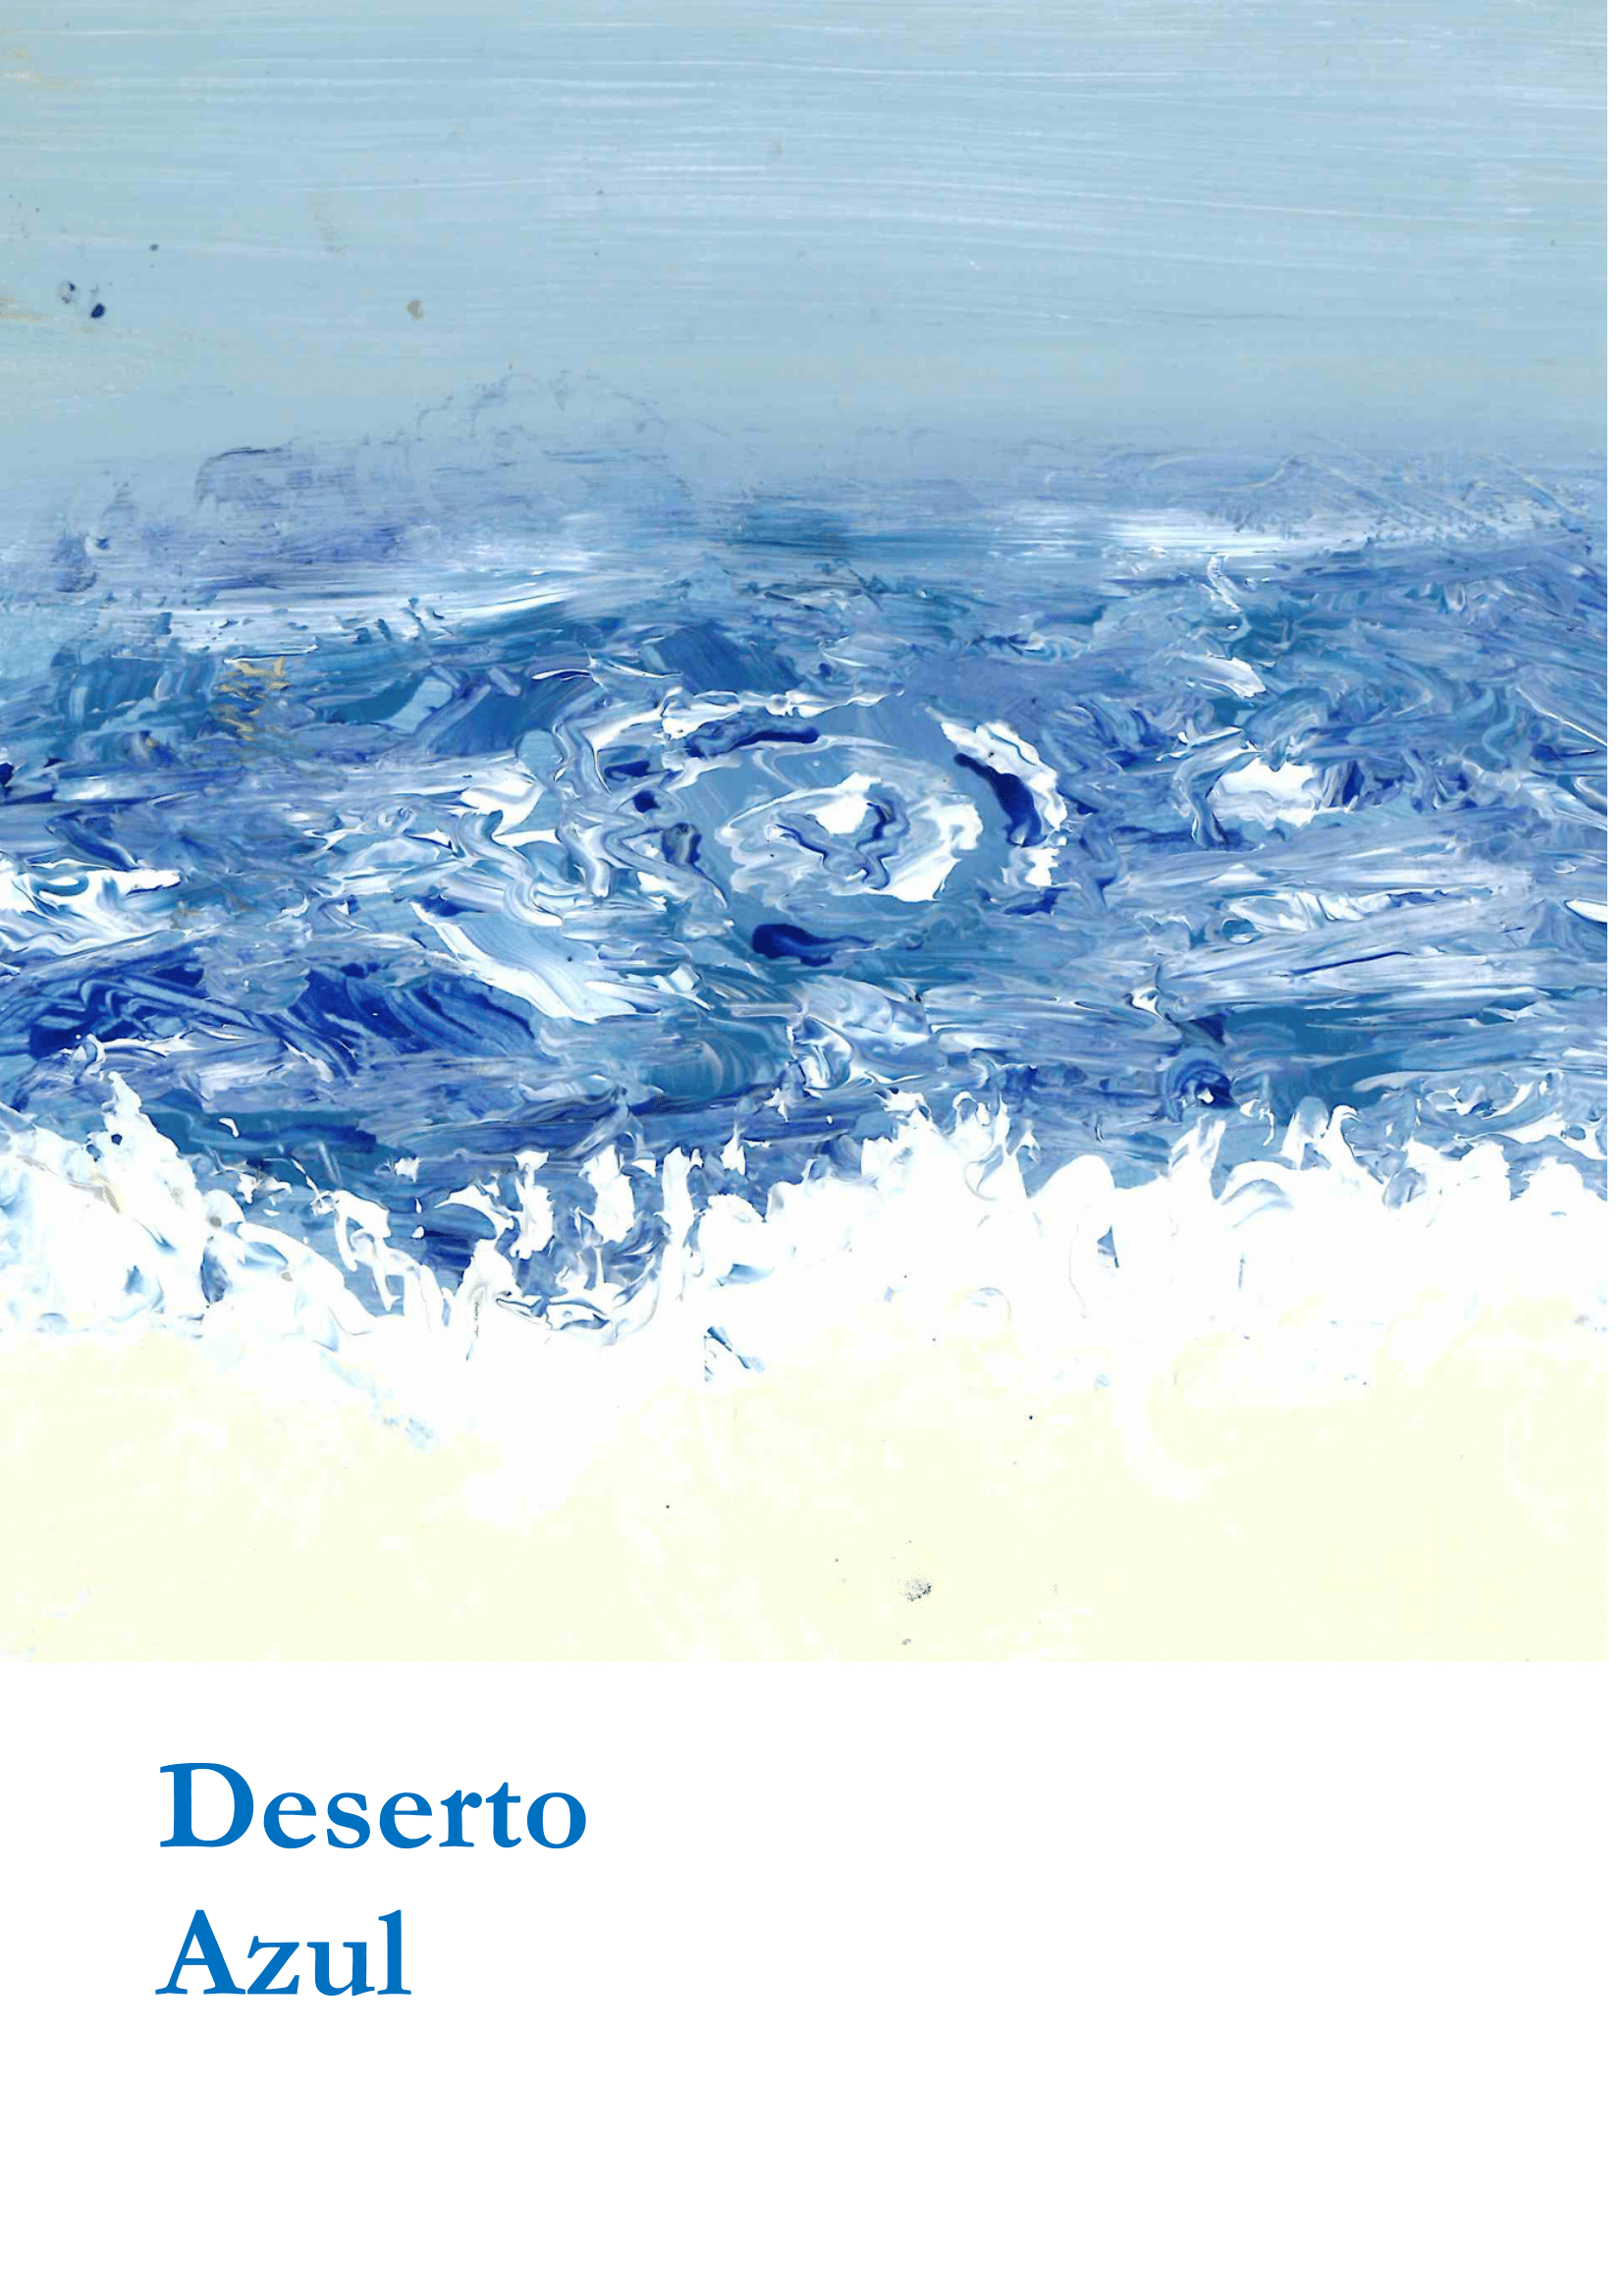 Deserto azul-01.png